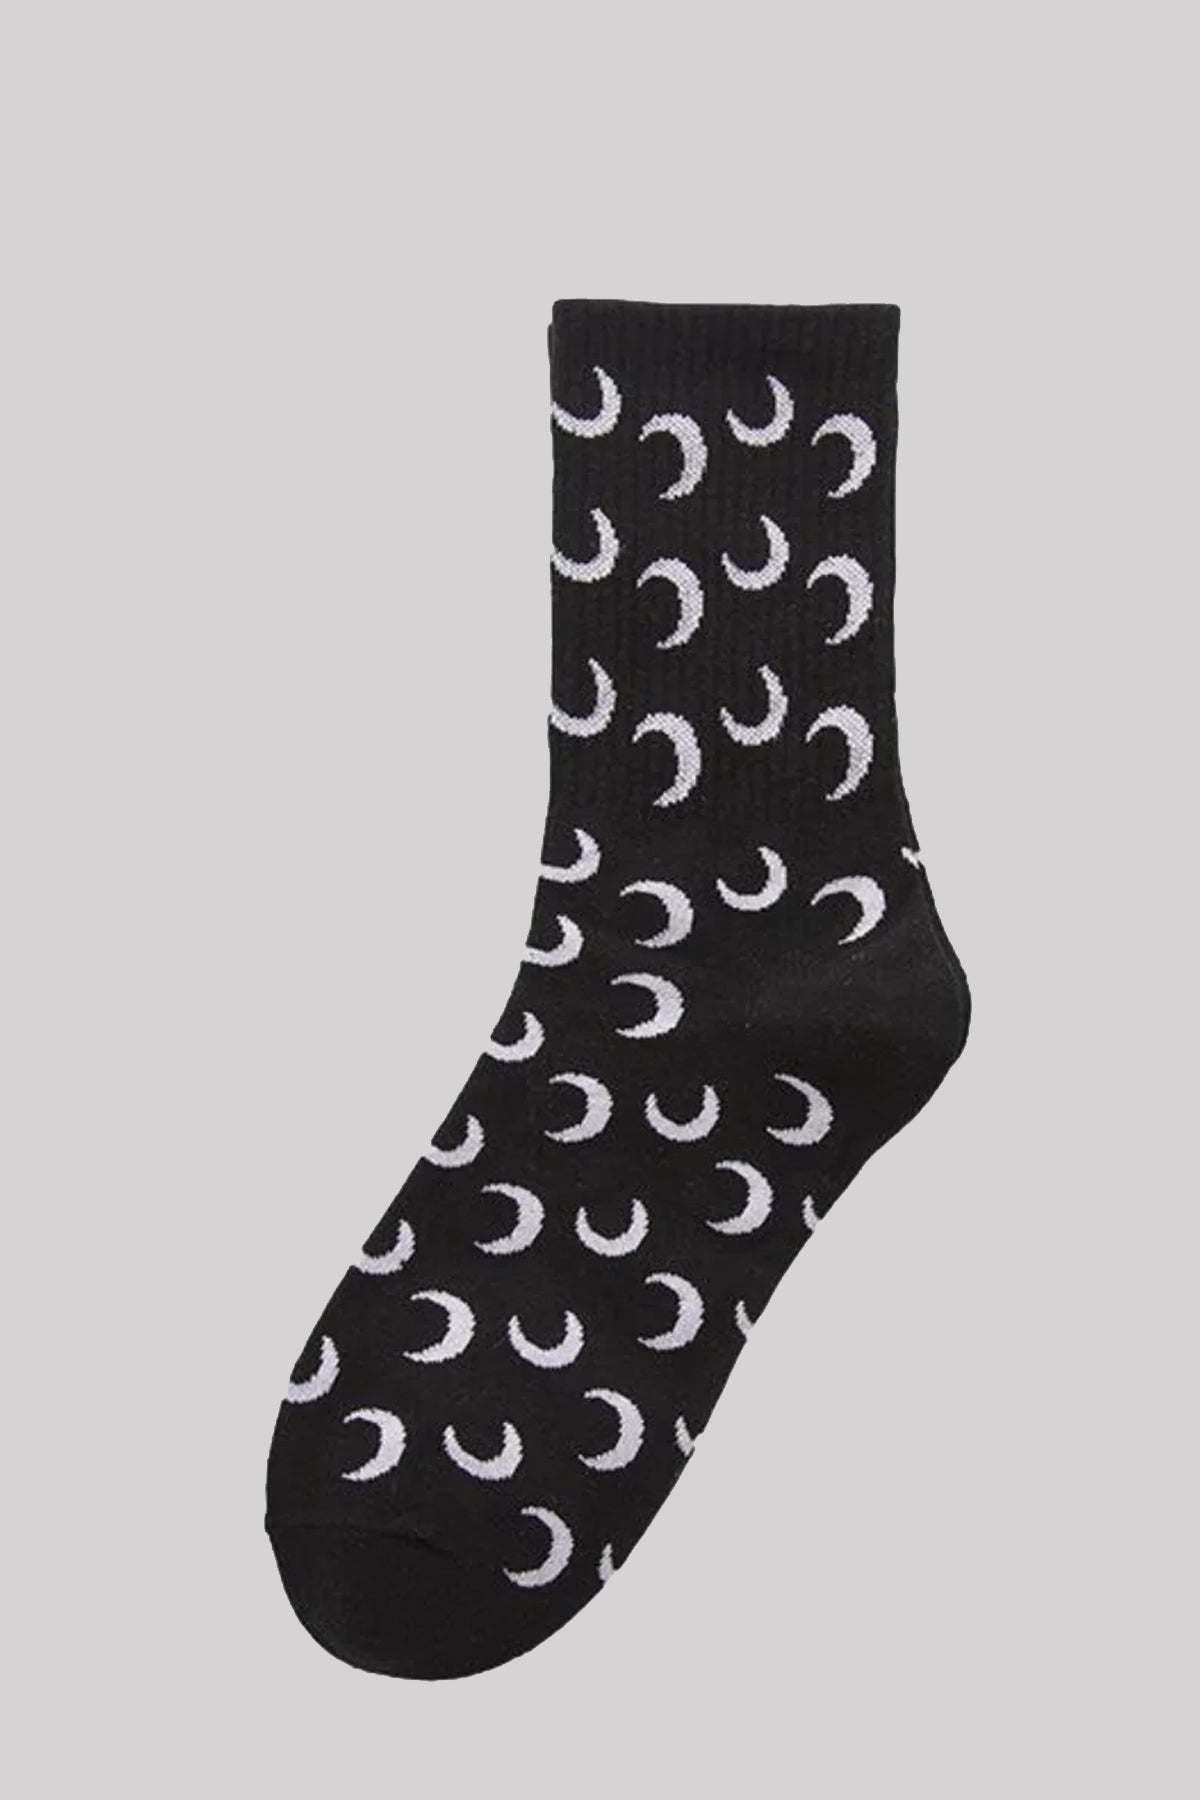 Ro Rox Crescent Moon Celestial Black White Ribbed Crew Socks